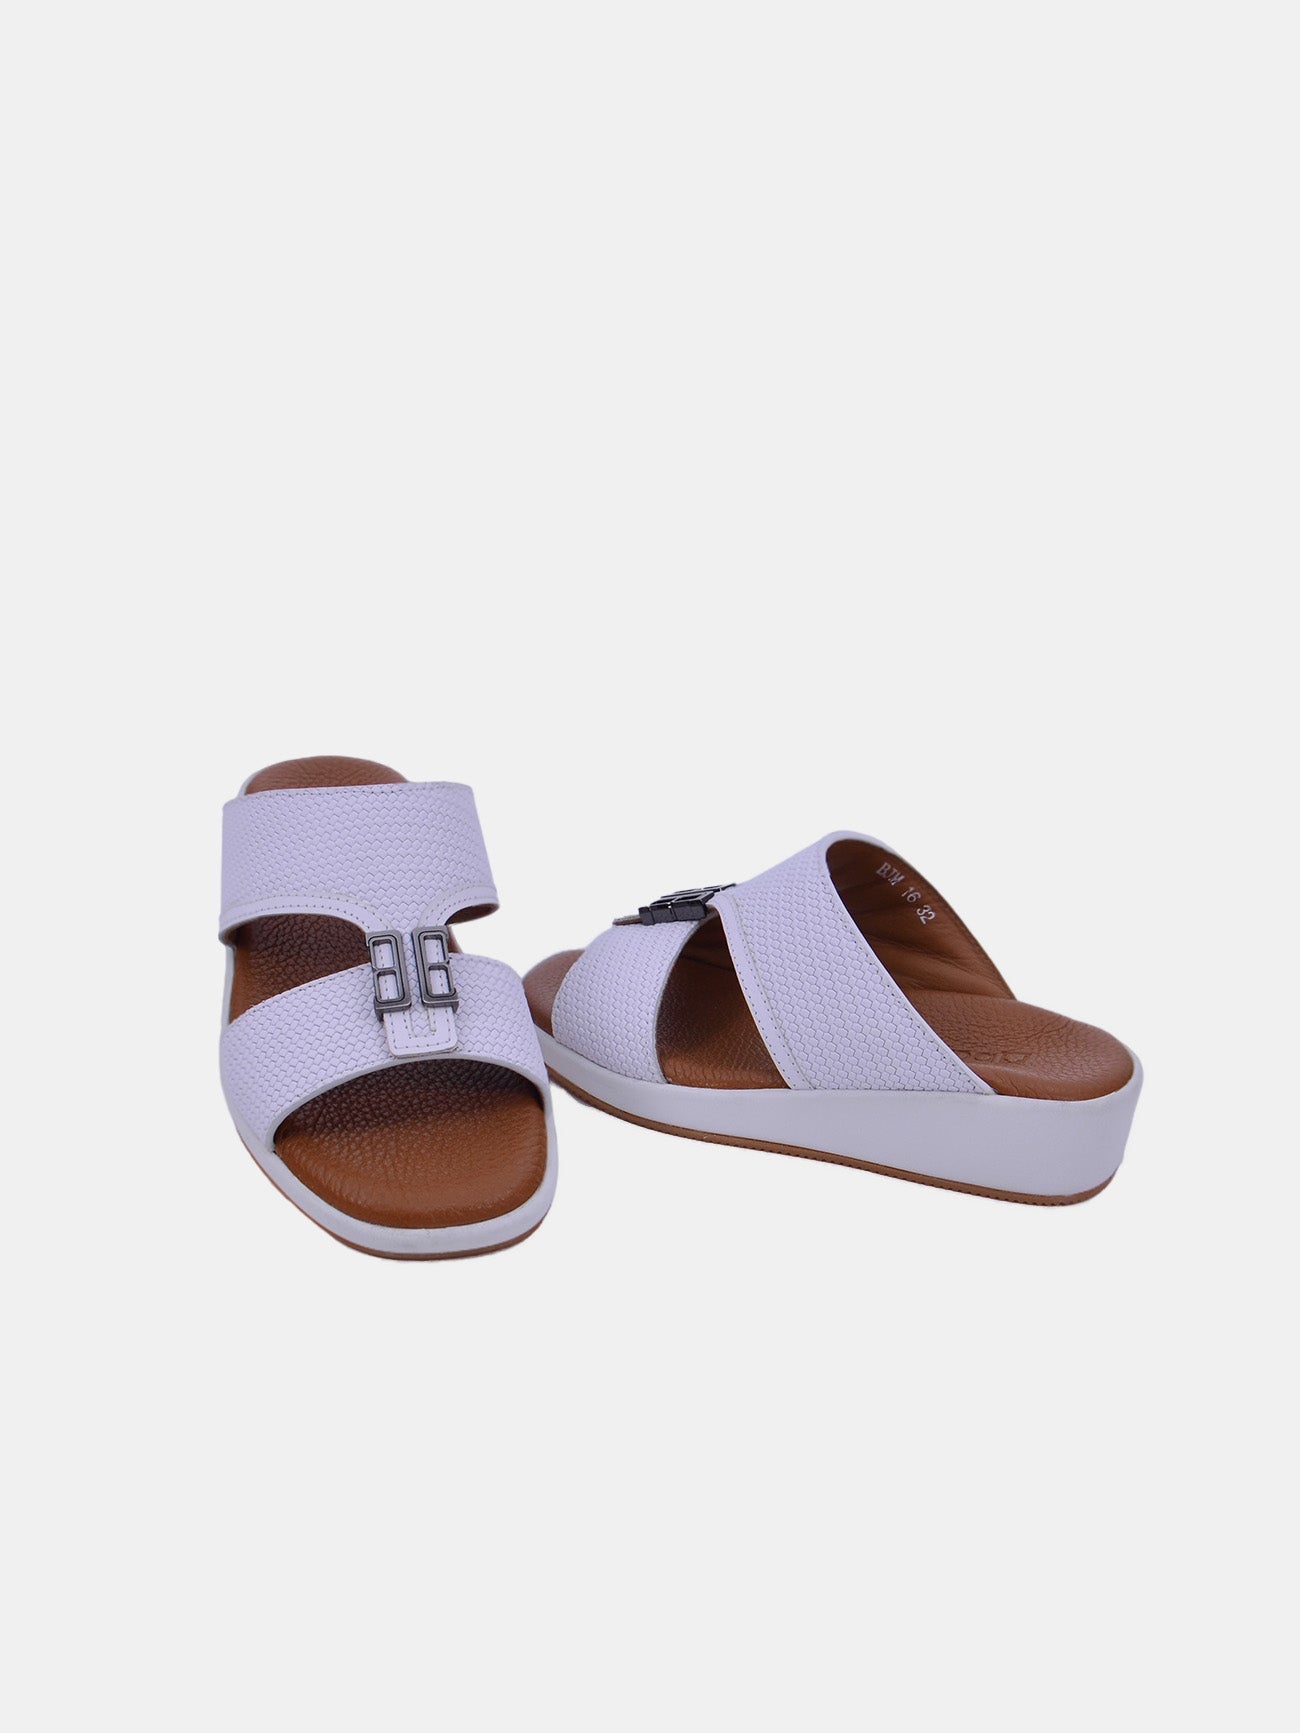 Barjeel Uno BJM 16 Boys Arabic Sandals #color_White